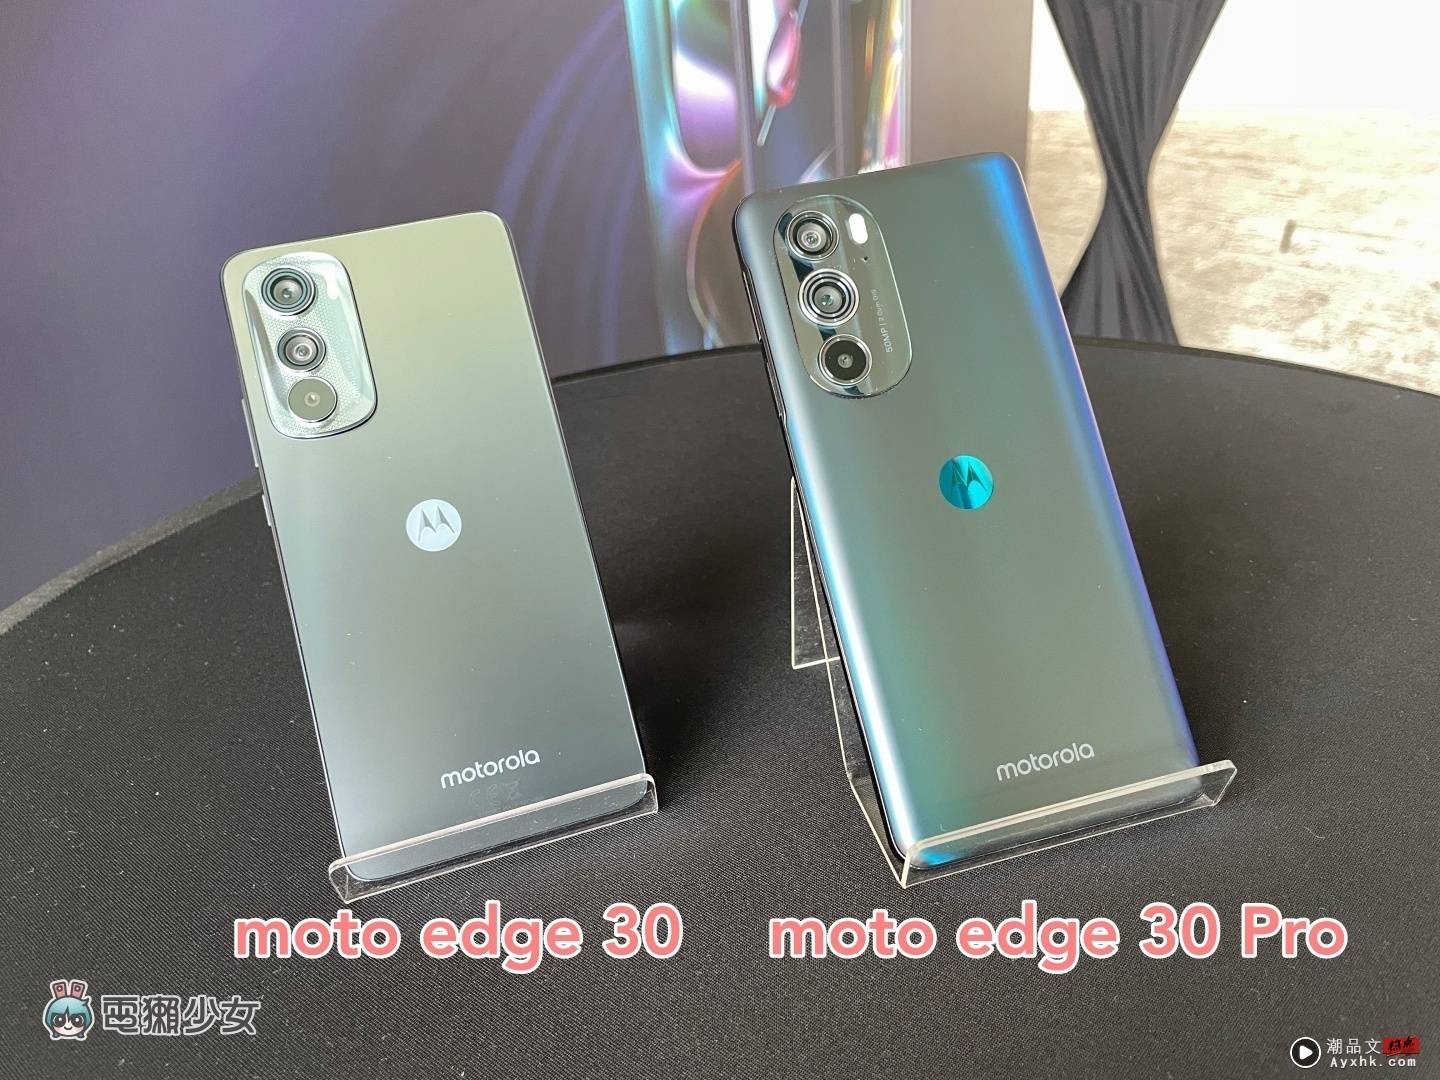 Motorola edge 30／30 Pro 正式发表！搭载 5000 万素的主镜头，大幅提升拍摄表现 同场加映：万元有找的 moto g82 5G 也登场啦 数码科技 图1张